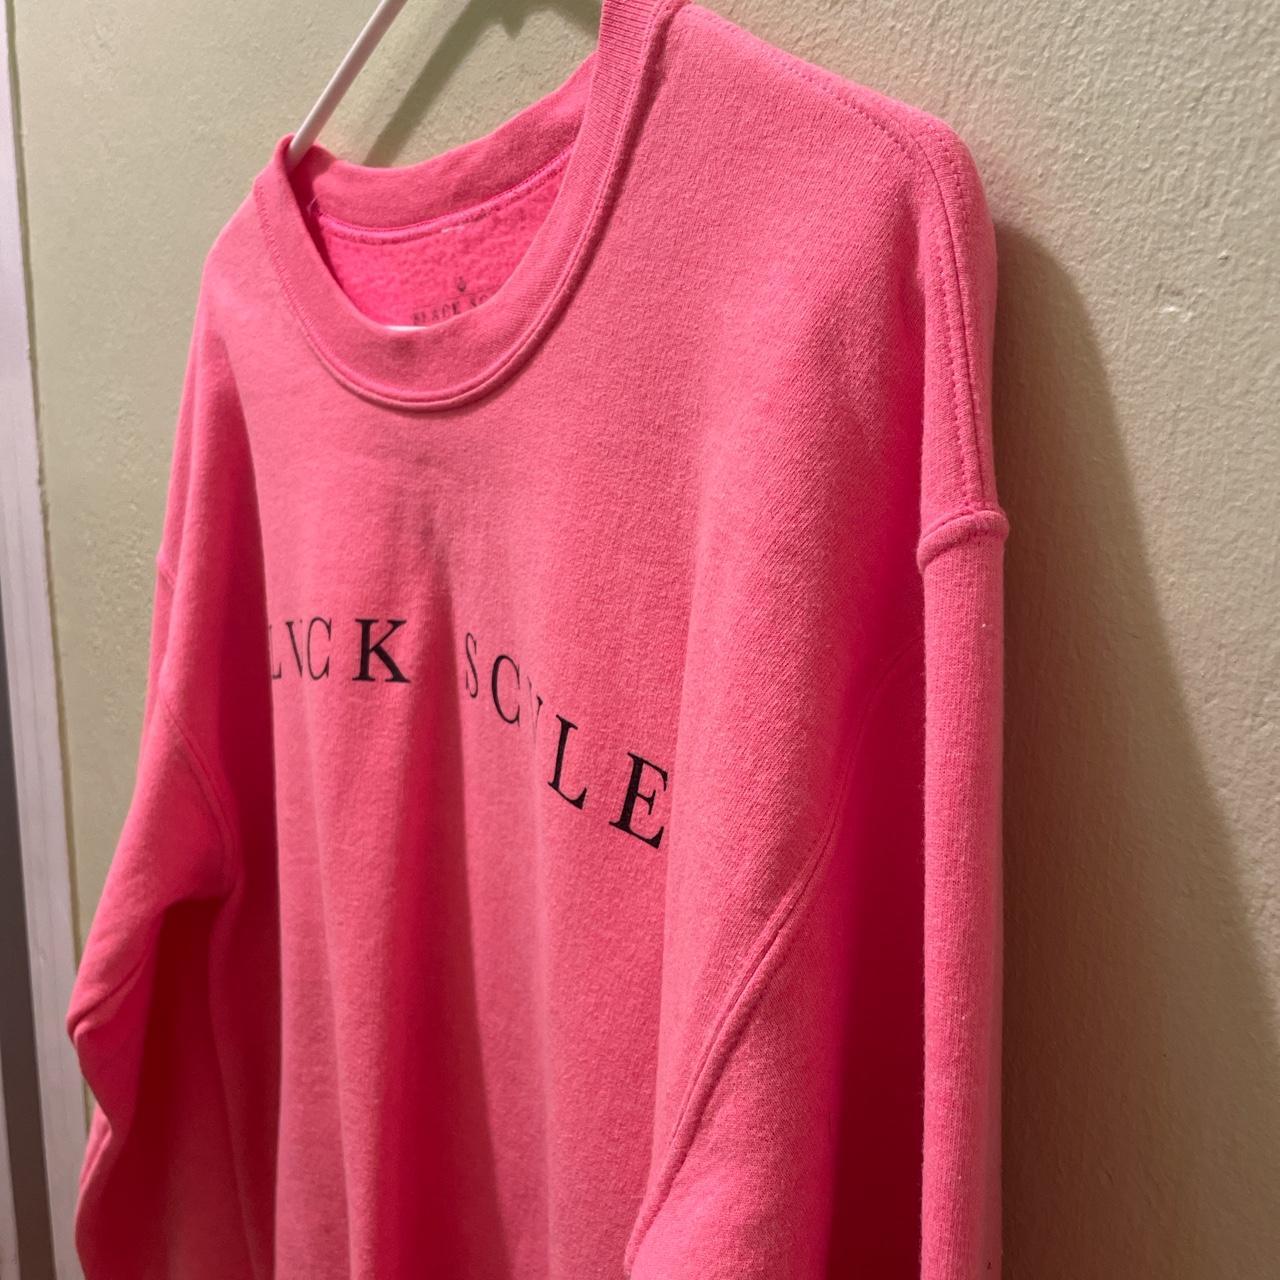 Black Scale Men's Pink and Black Sweatshirt (7)